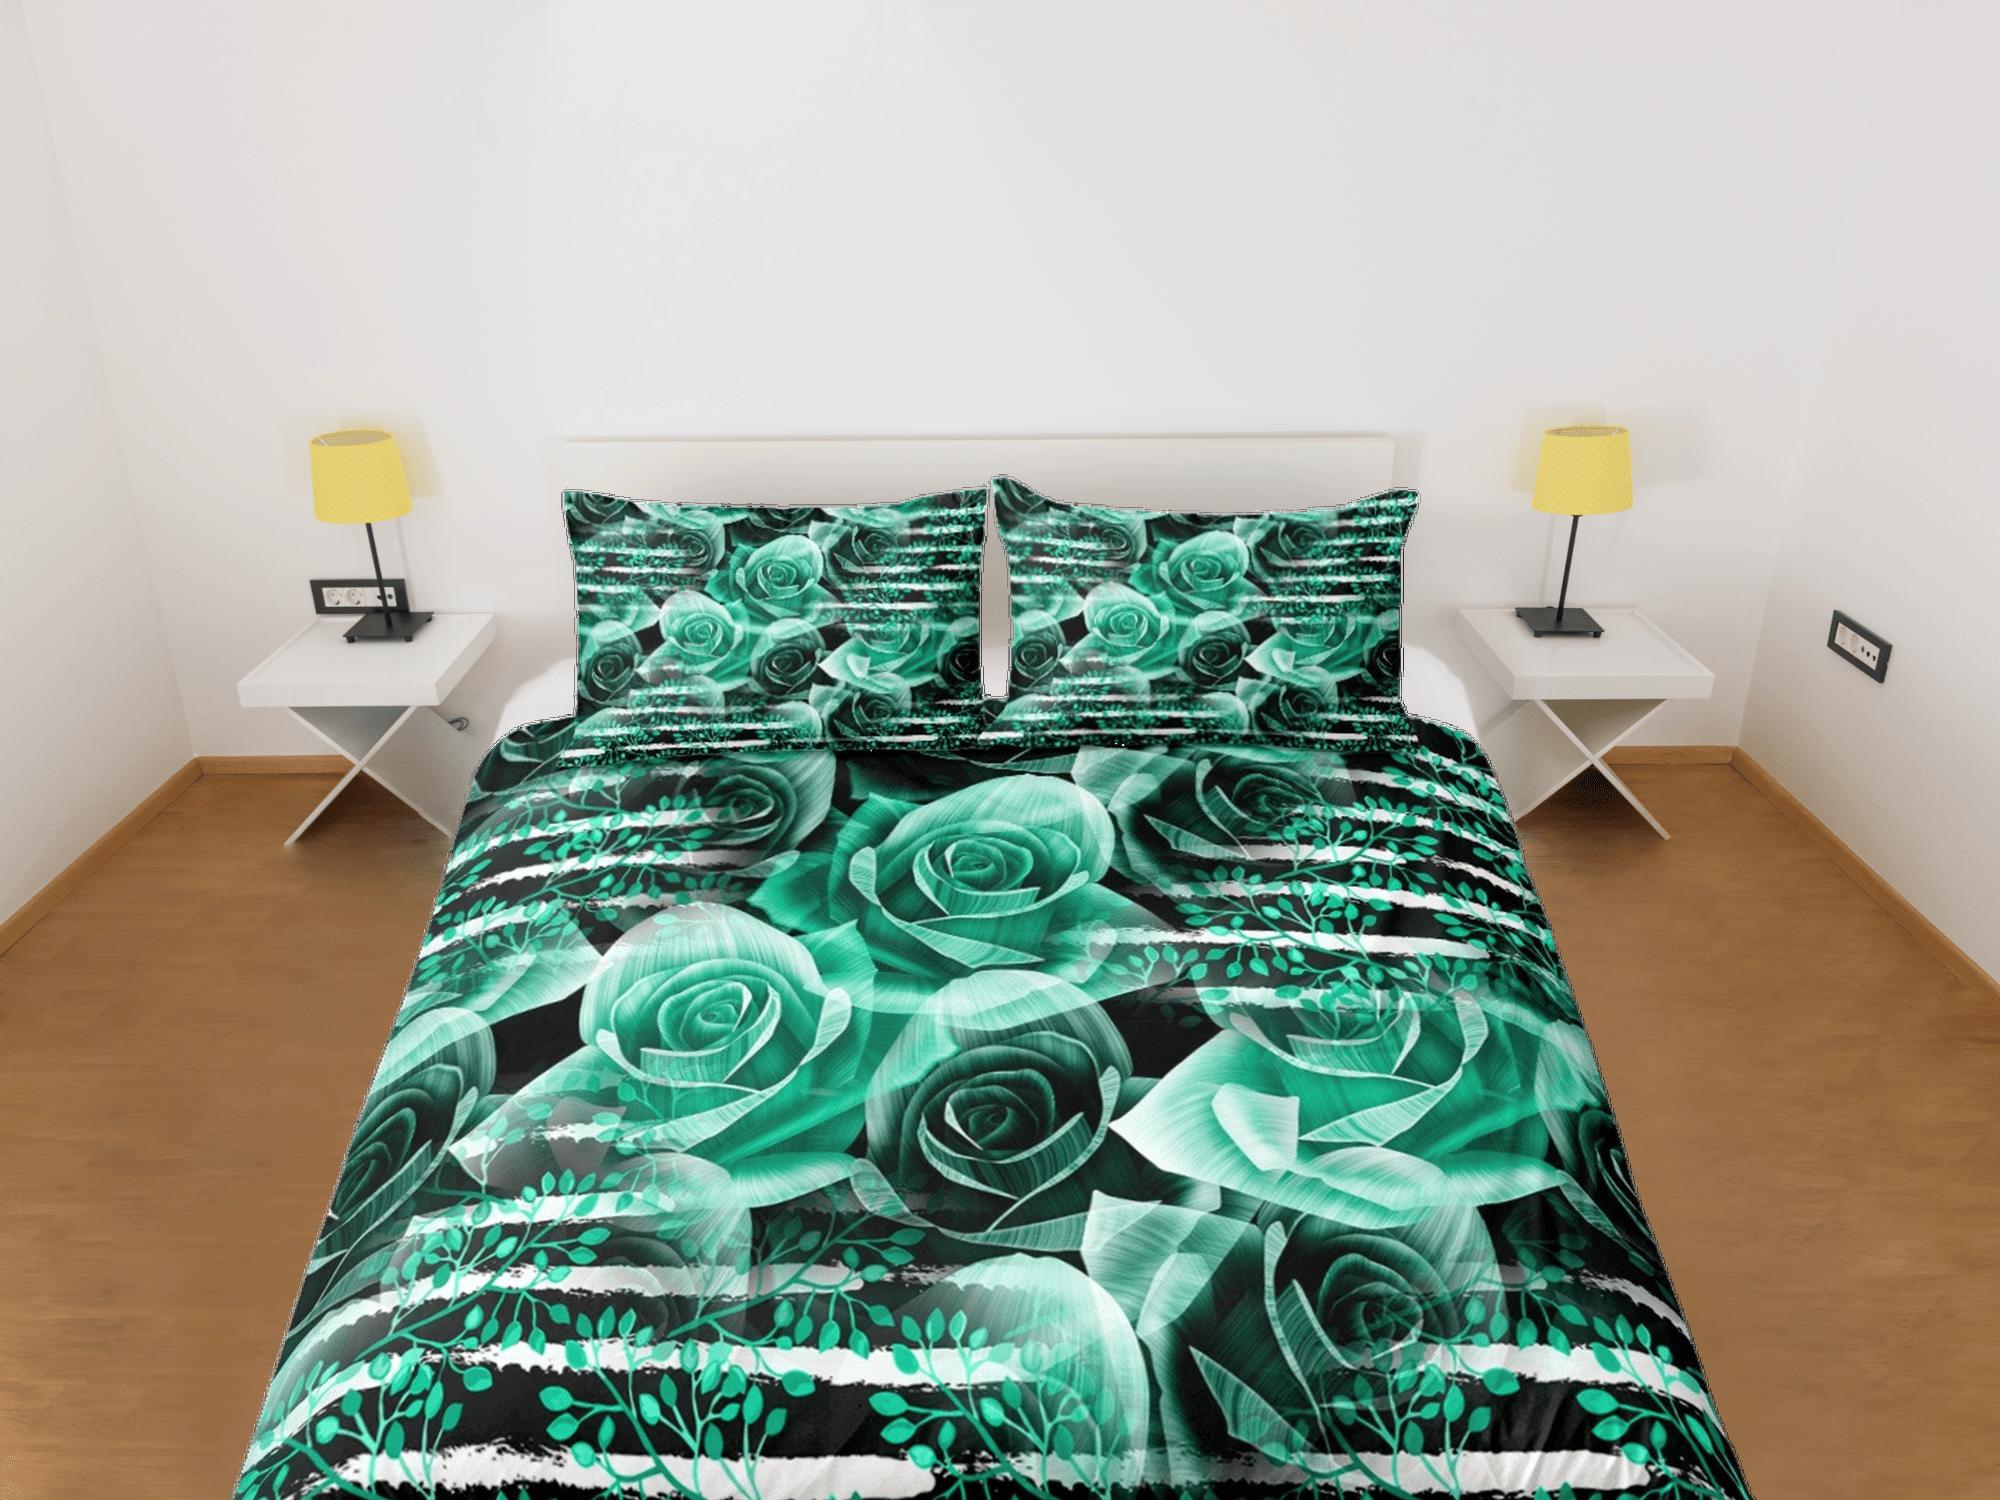 daintyduvet Green roses floral duvet cover colorful bedding, teen girl bedroom, baby girl crib bedding boho maximalist bedspread aesthetic bedding